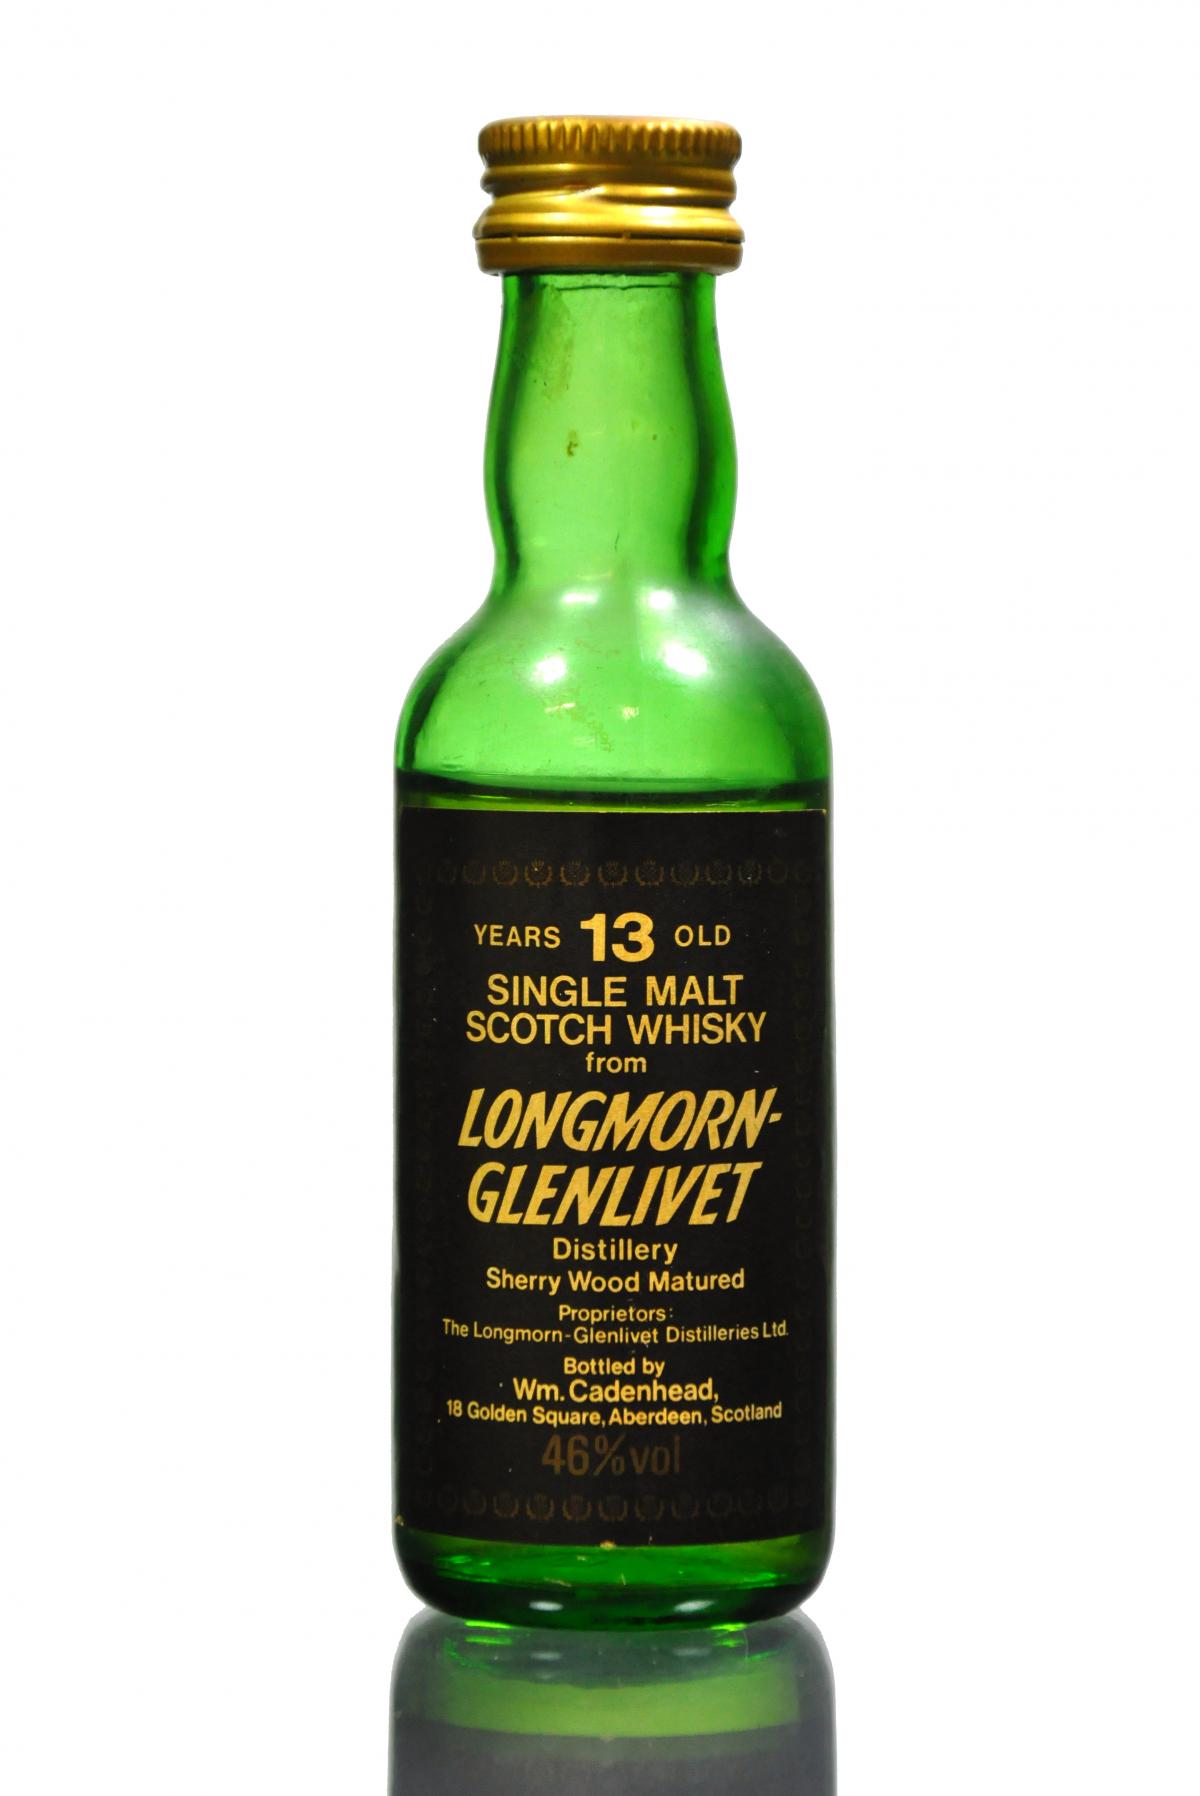 Longmorn-Glenlivet 13 Year Old - Cadenhead Miniature